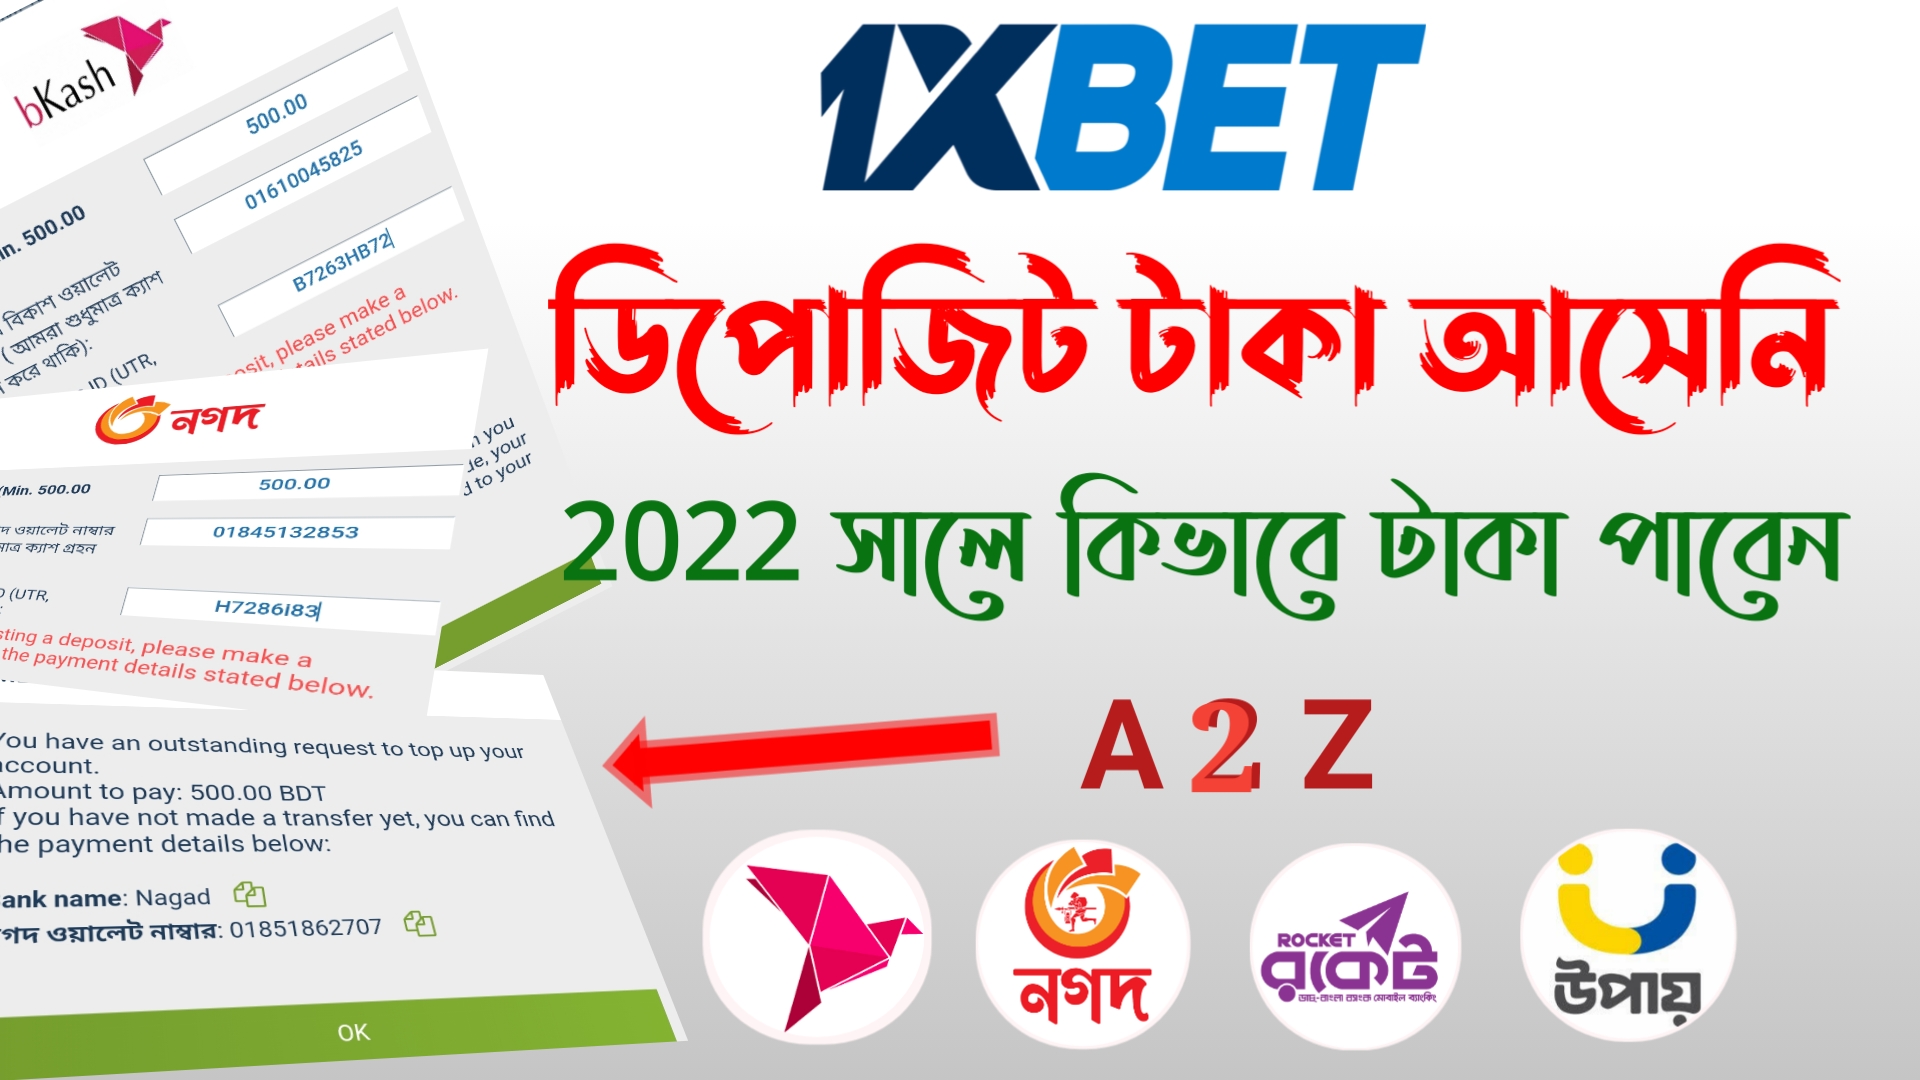 1xbet deposit problem solve | Bangla Tutorial বিকাশ ডিপোজিট টাকা আসেনি সমাধান Reject Deposit